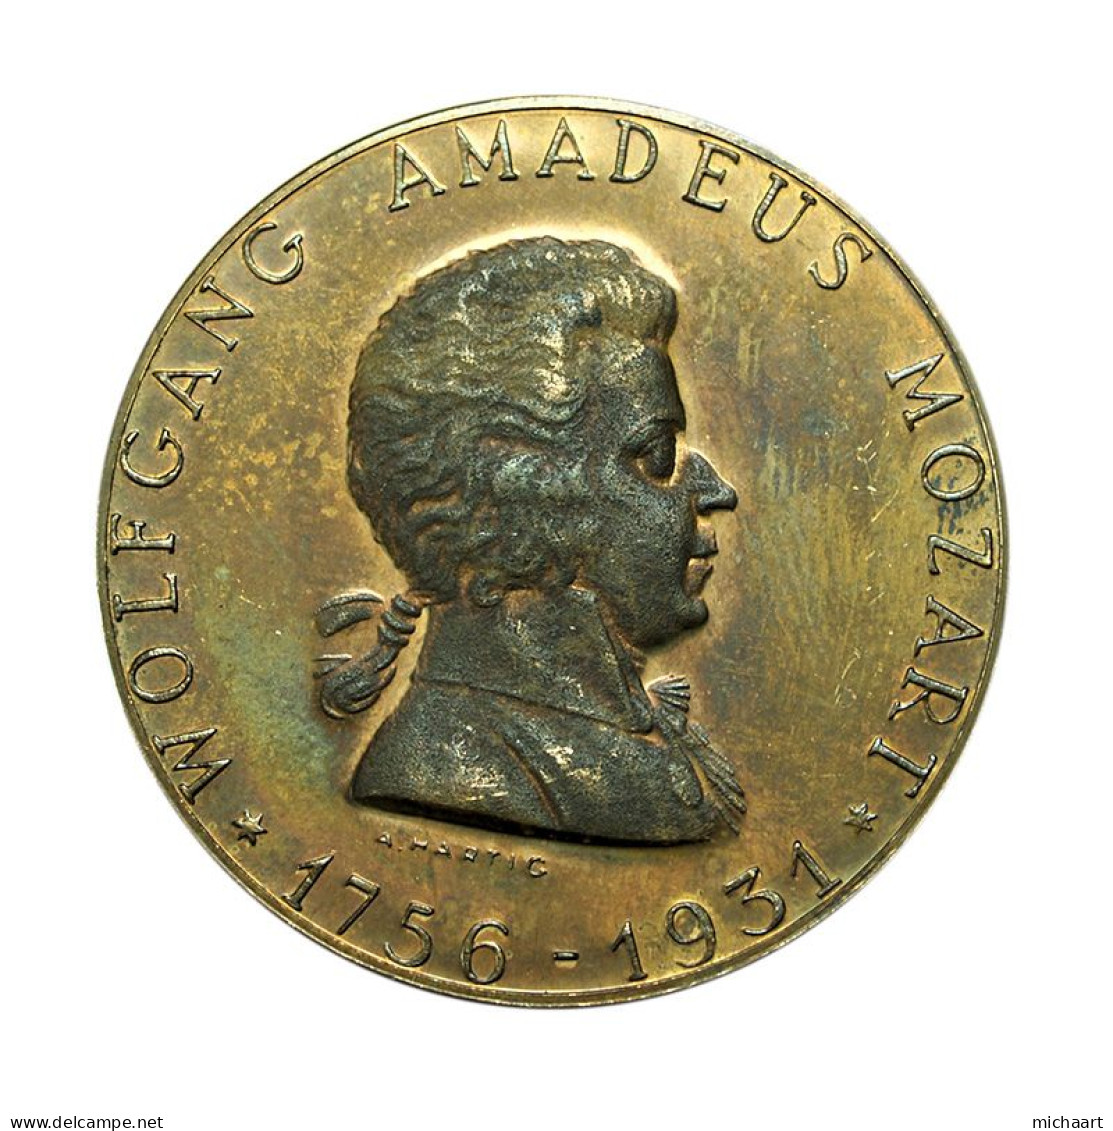 Austria Medal 1931 Wolfgang Amadeus Mozart & Hohensalzburg Fortress 35mm 02717 - Professionali / Di Società